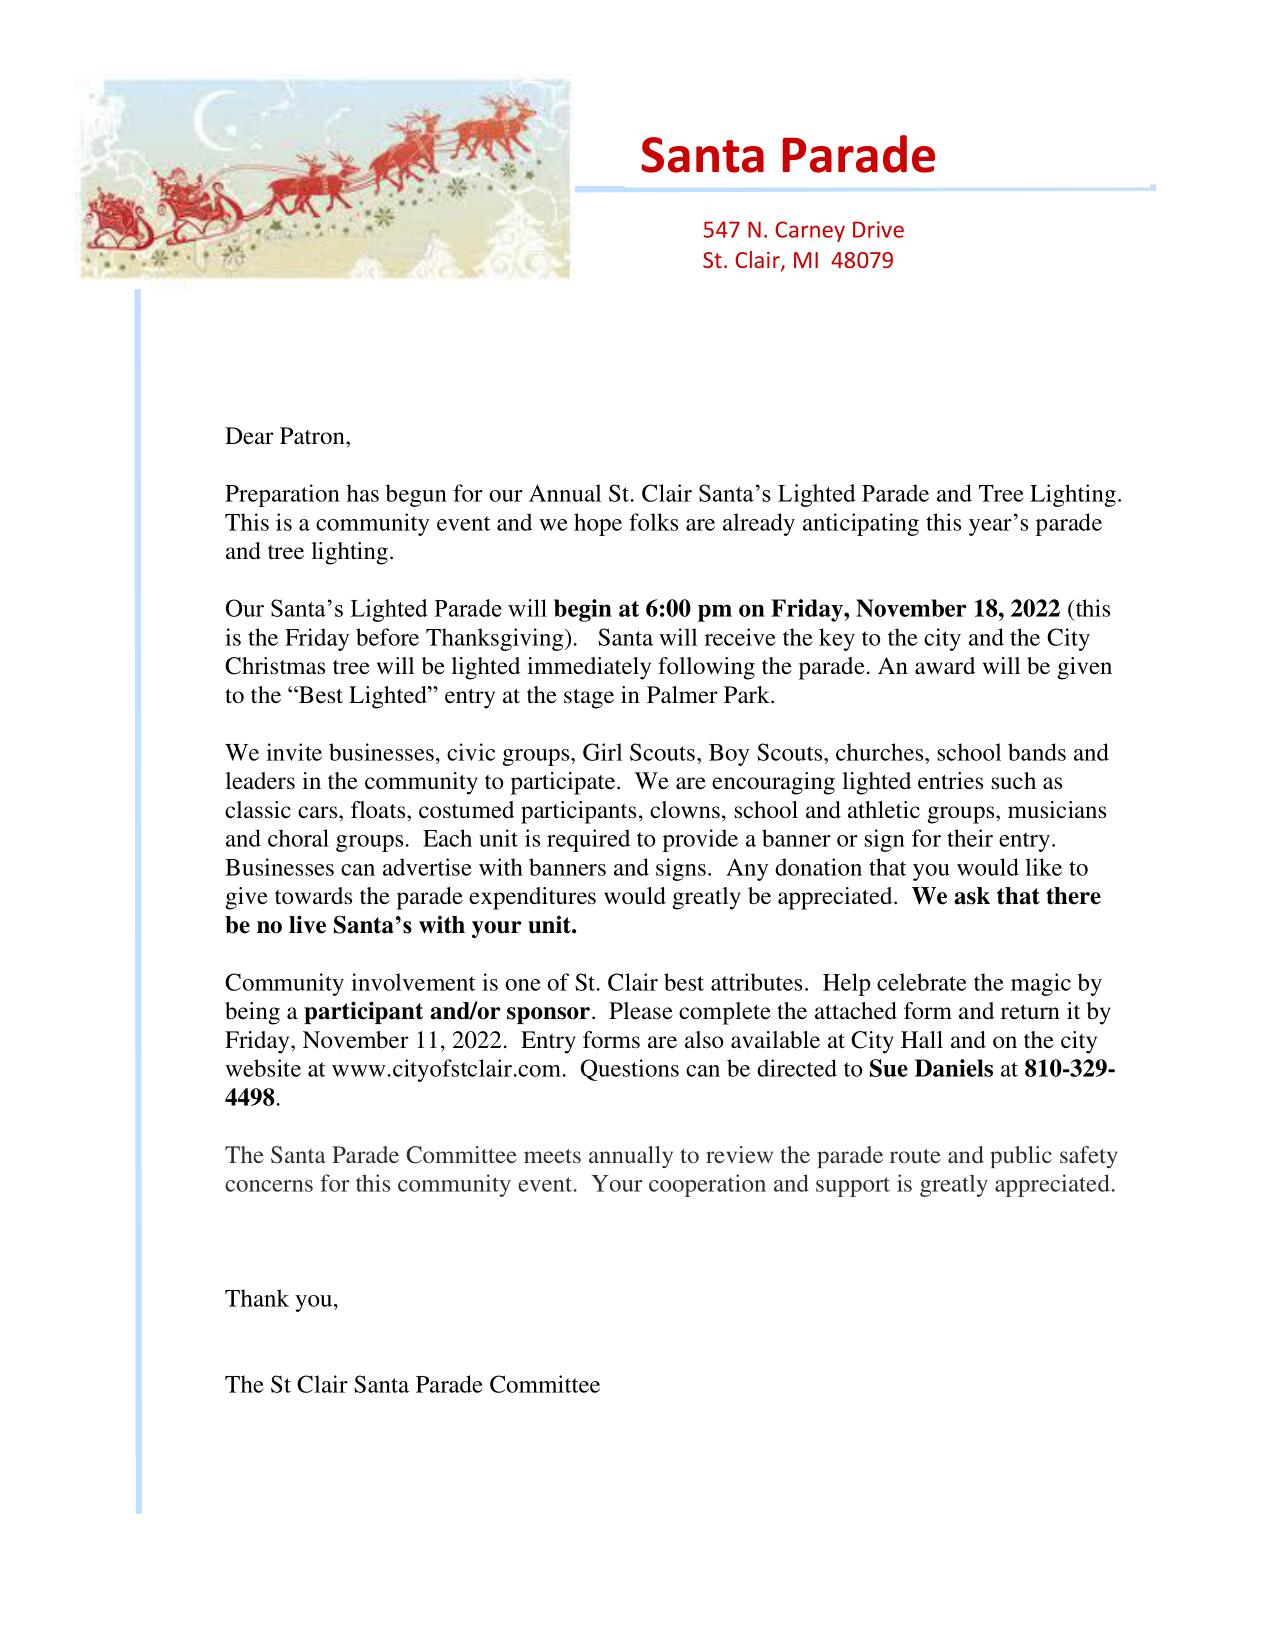 Santa Parade Sponsor-Participation Letter 2022